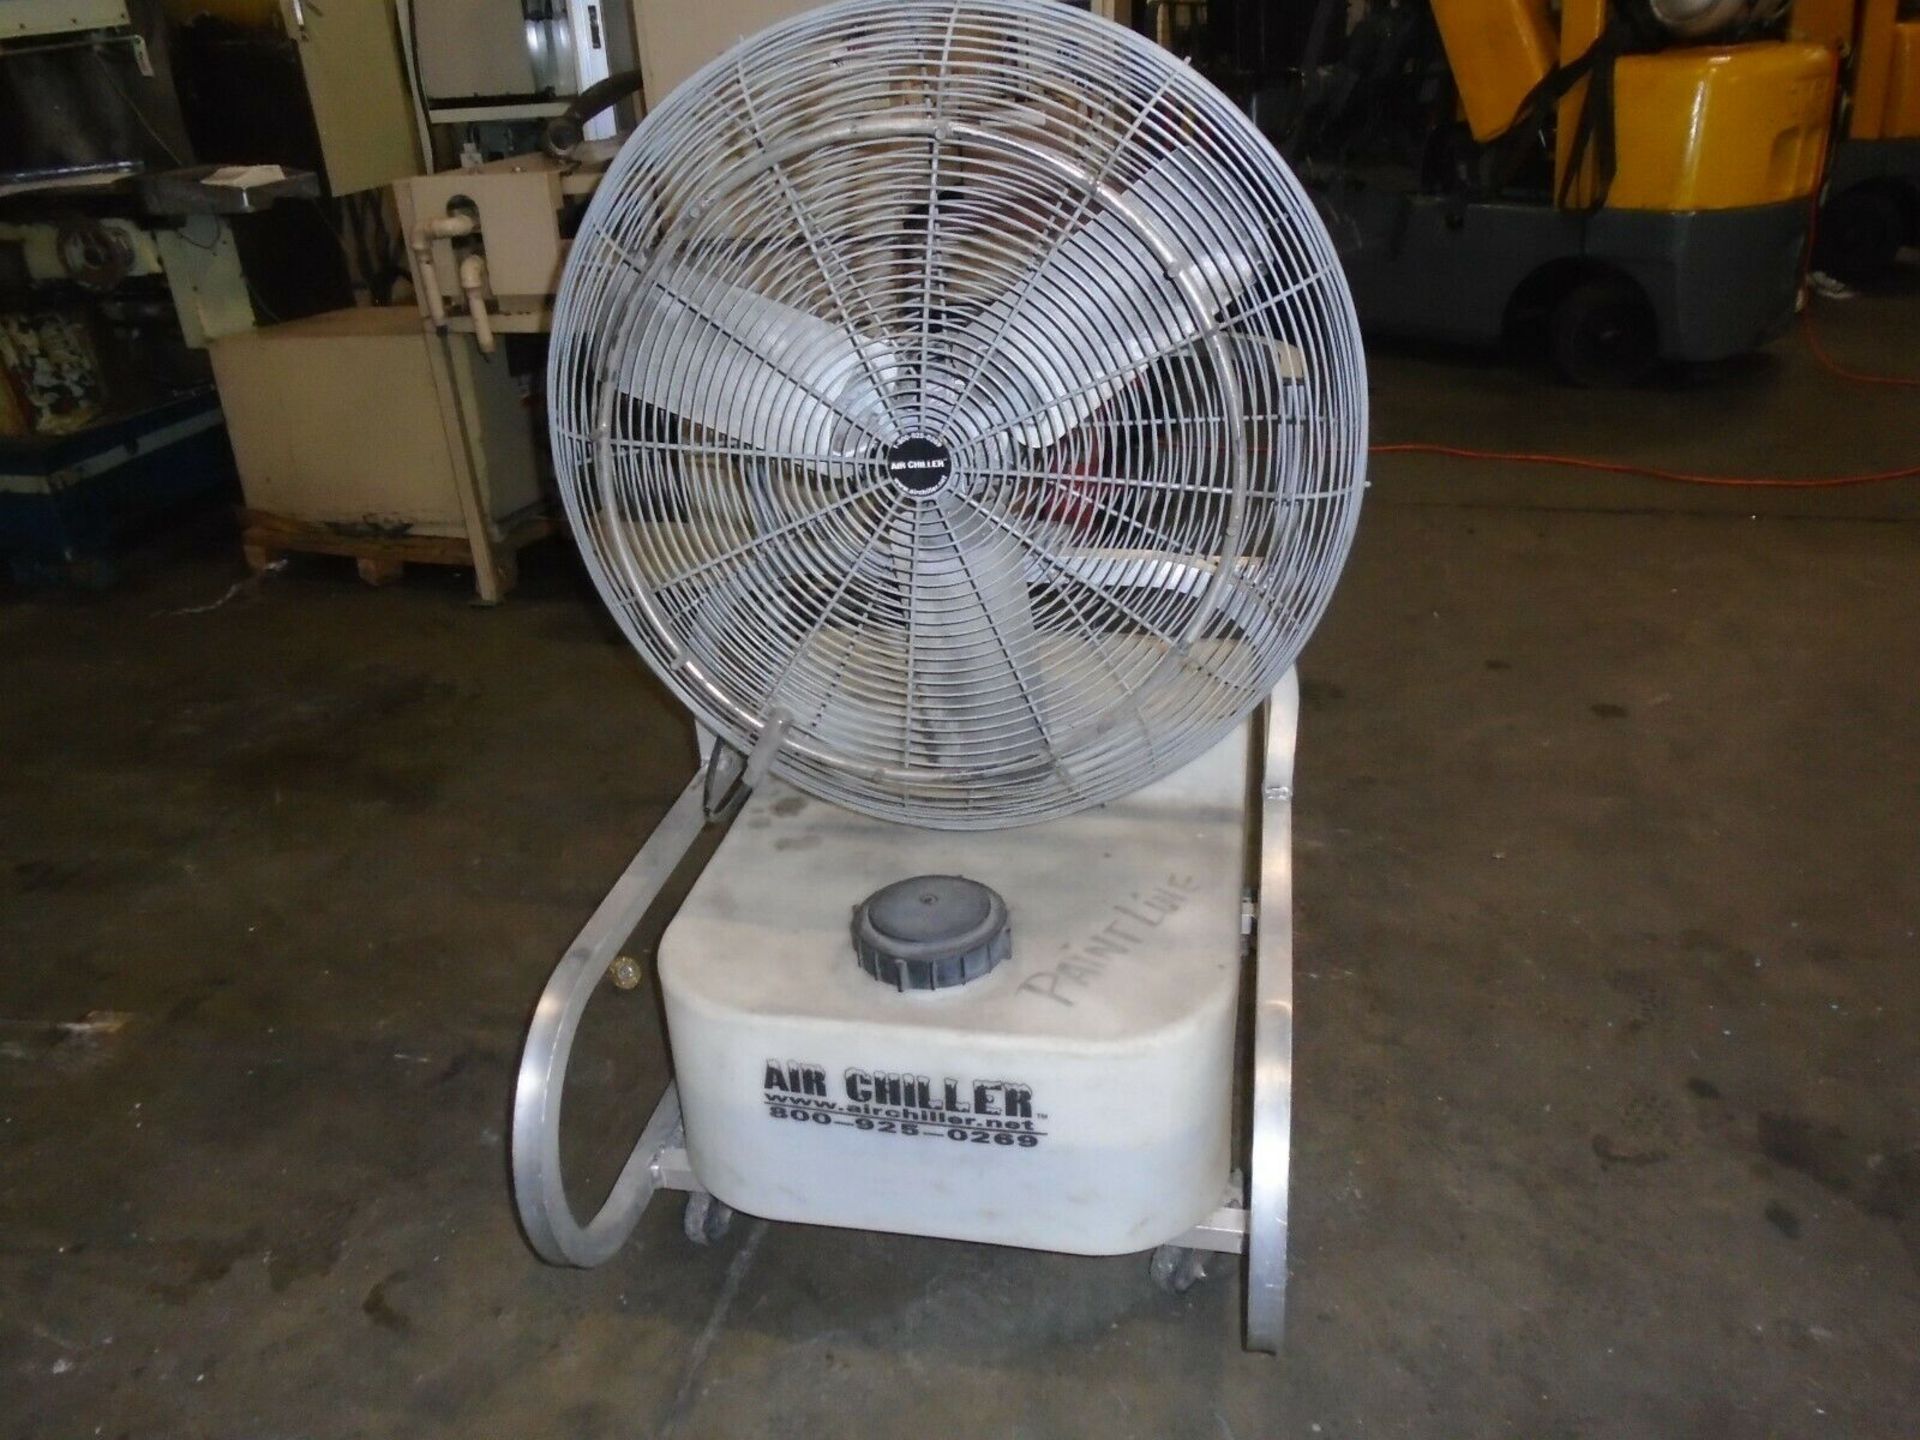 Air Chiller CU-24” Industrial Misting Fan Evaporative Cooler - Image 2 of 8